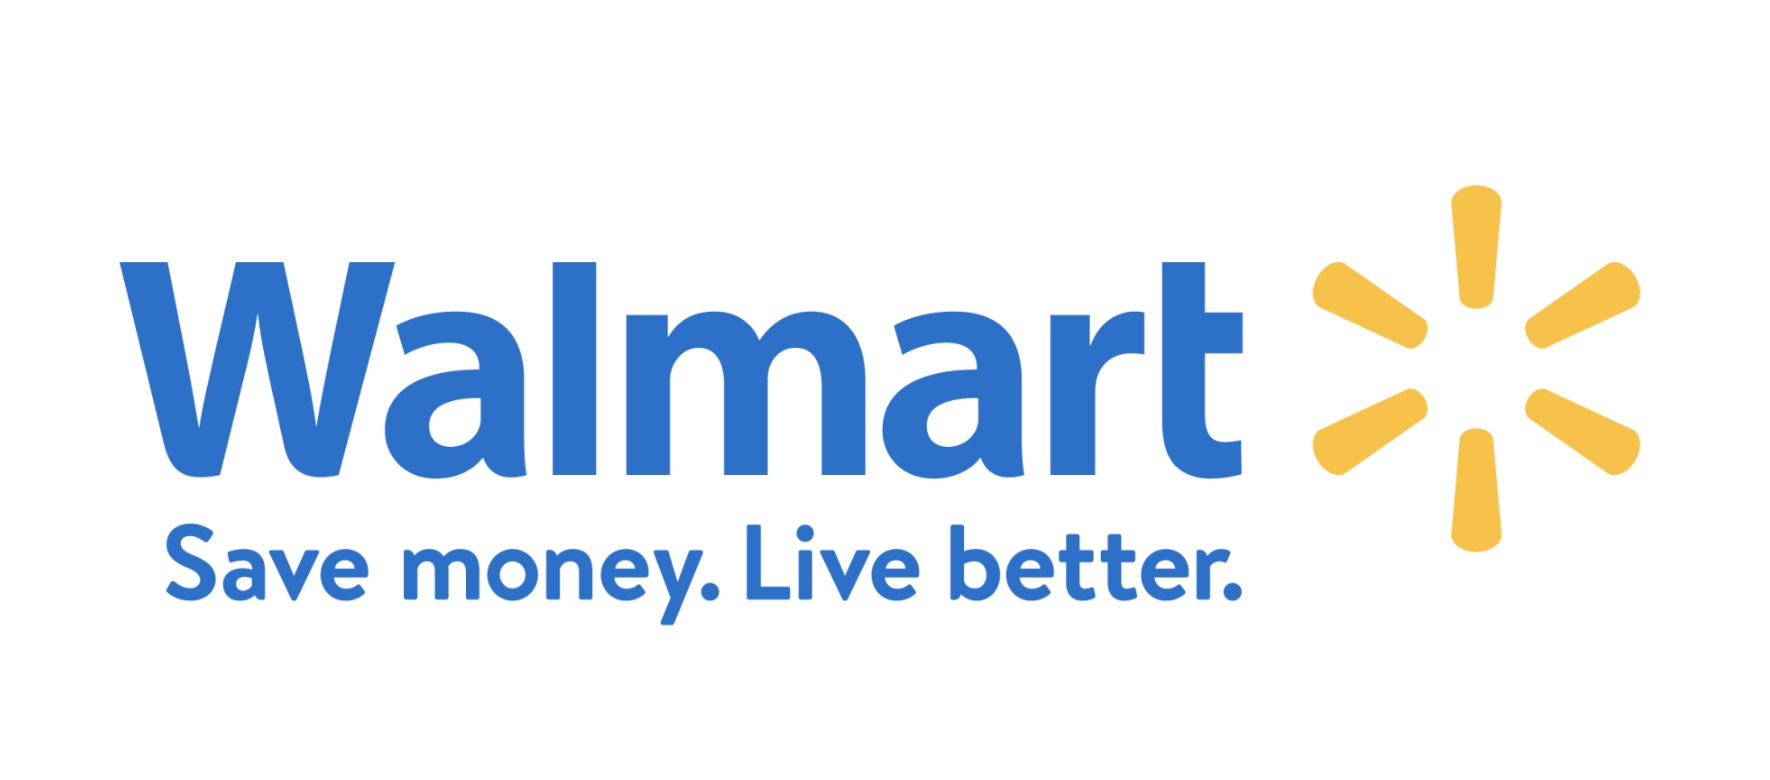 Why Did Walmart Change Their Slogan?